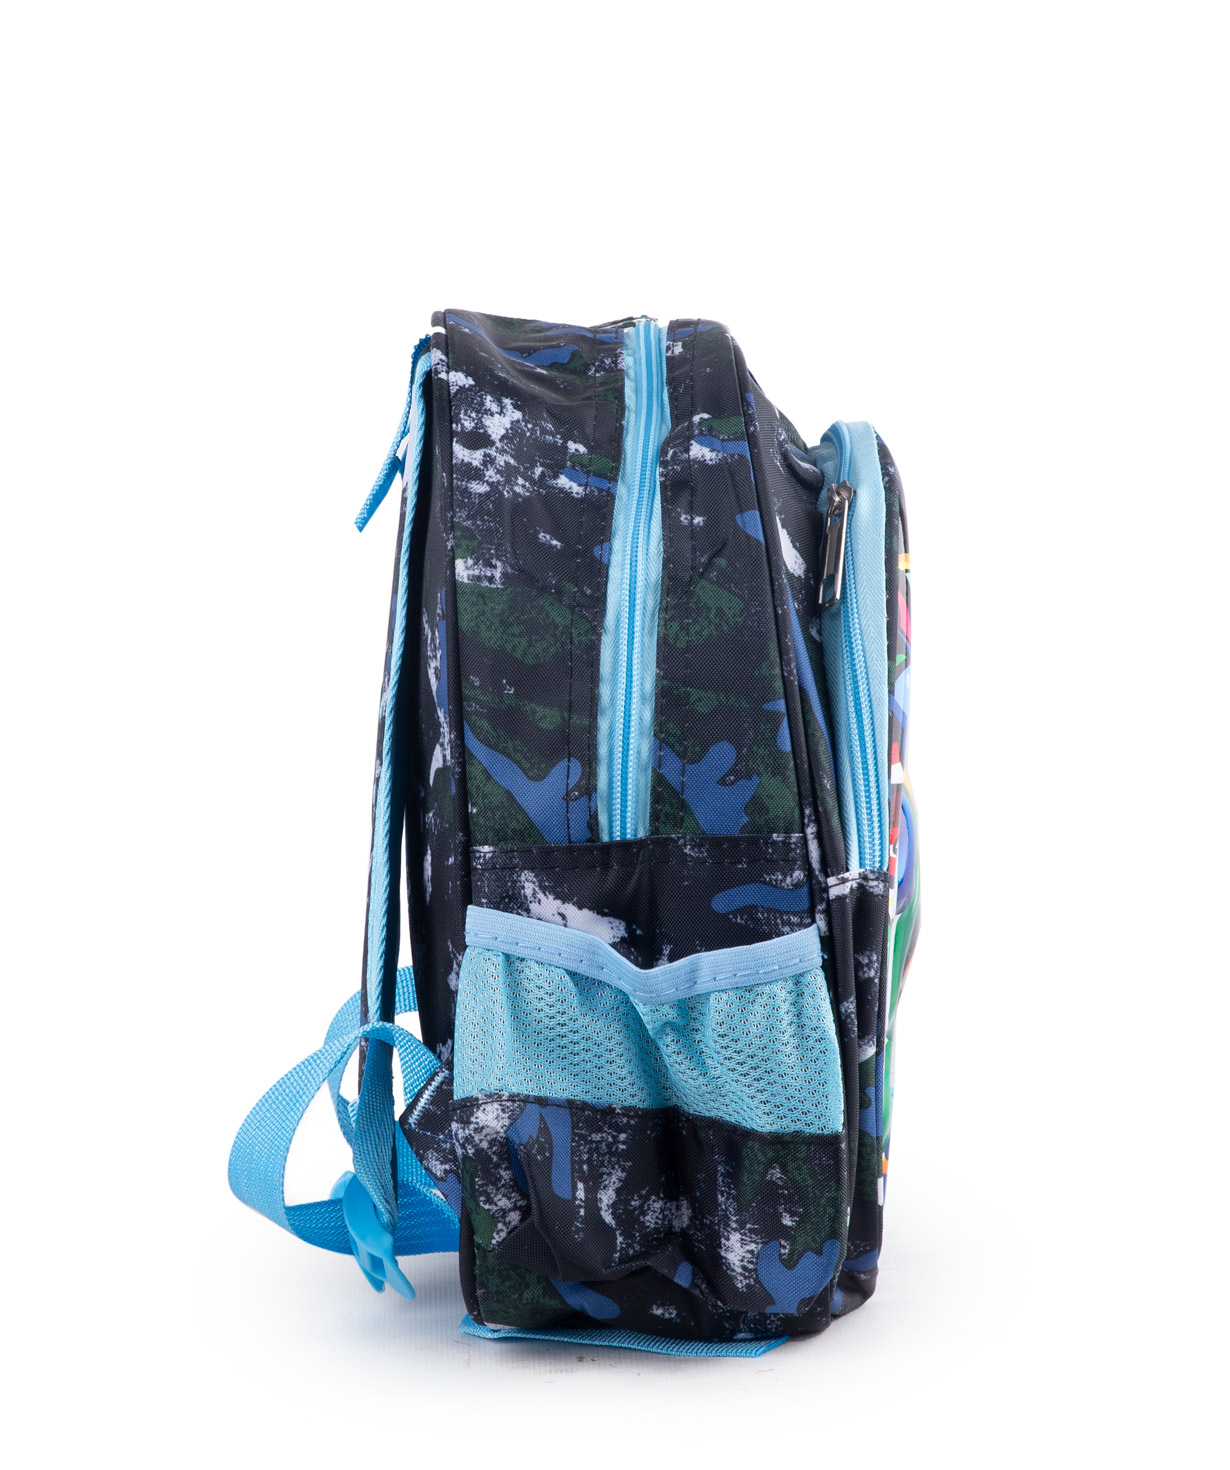 School bag №9